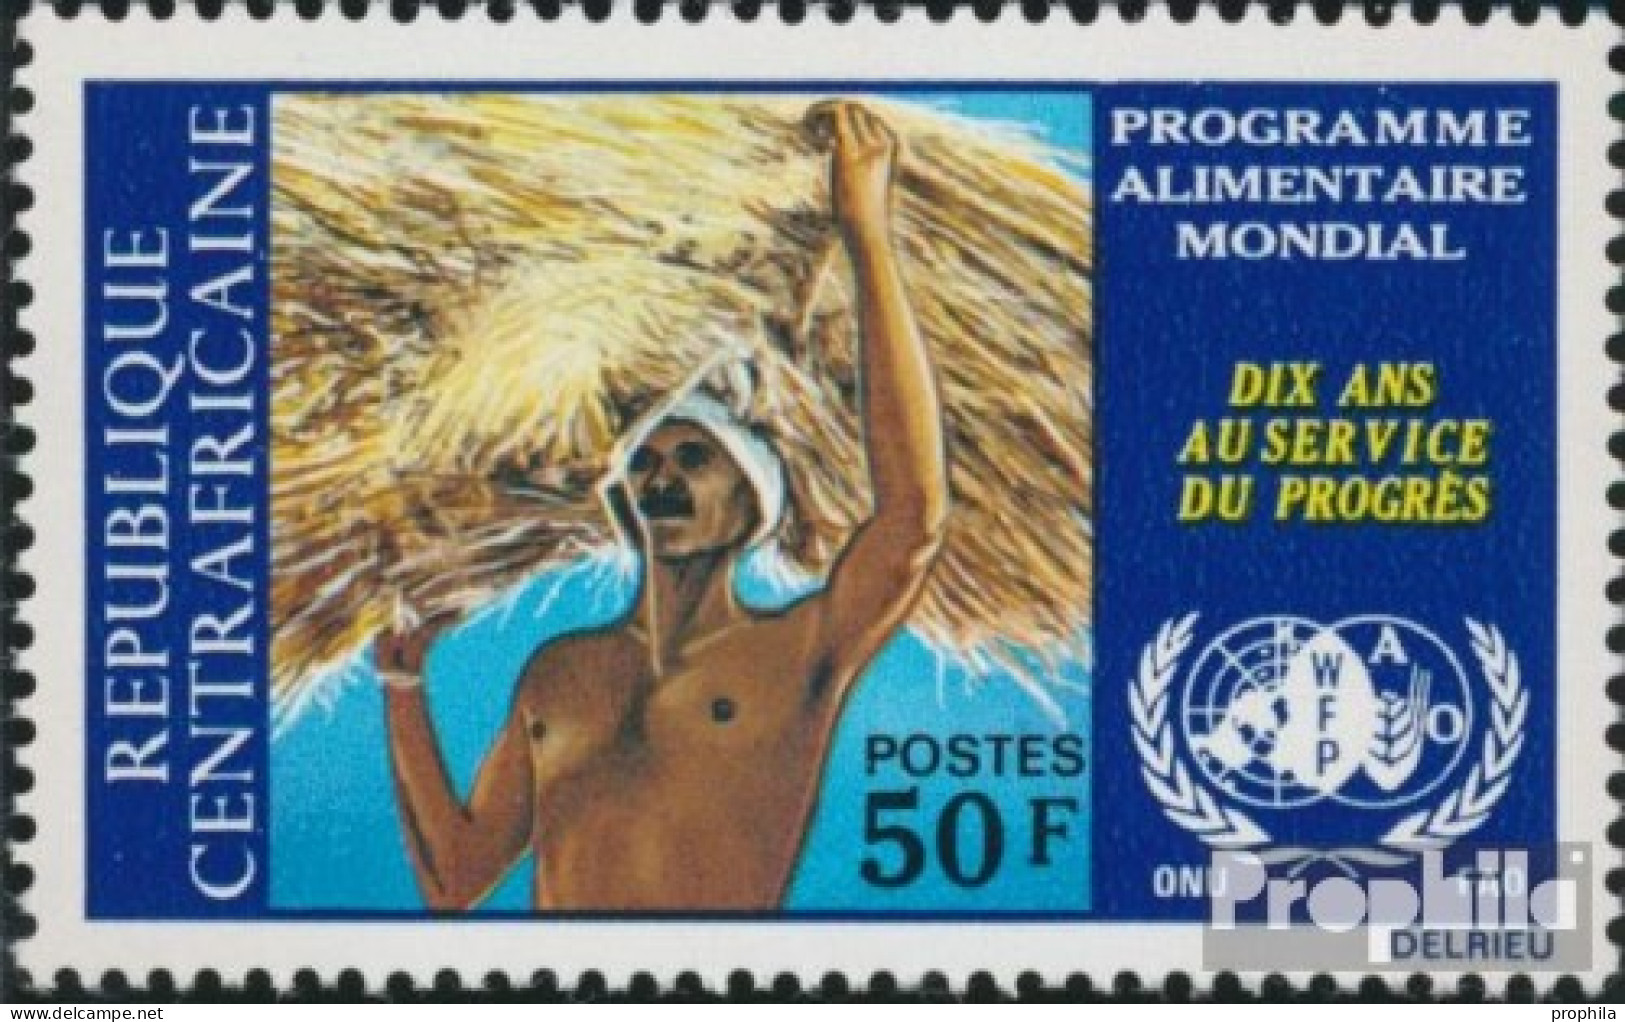 Zentralafrikanische Republik 311 (kompl.Ausg.) Postfrisch 1973 Welternährungsprogramm - Central African Republic